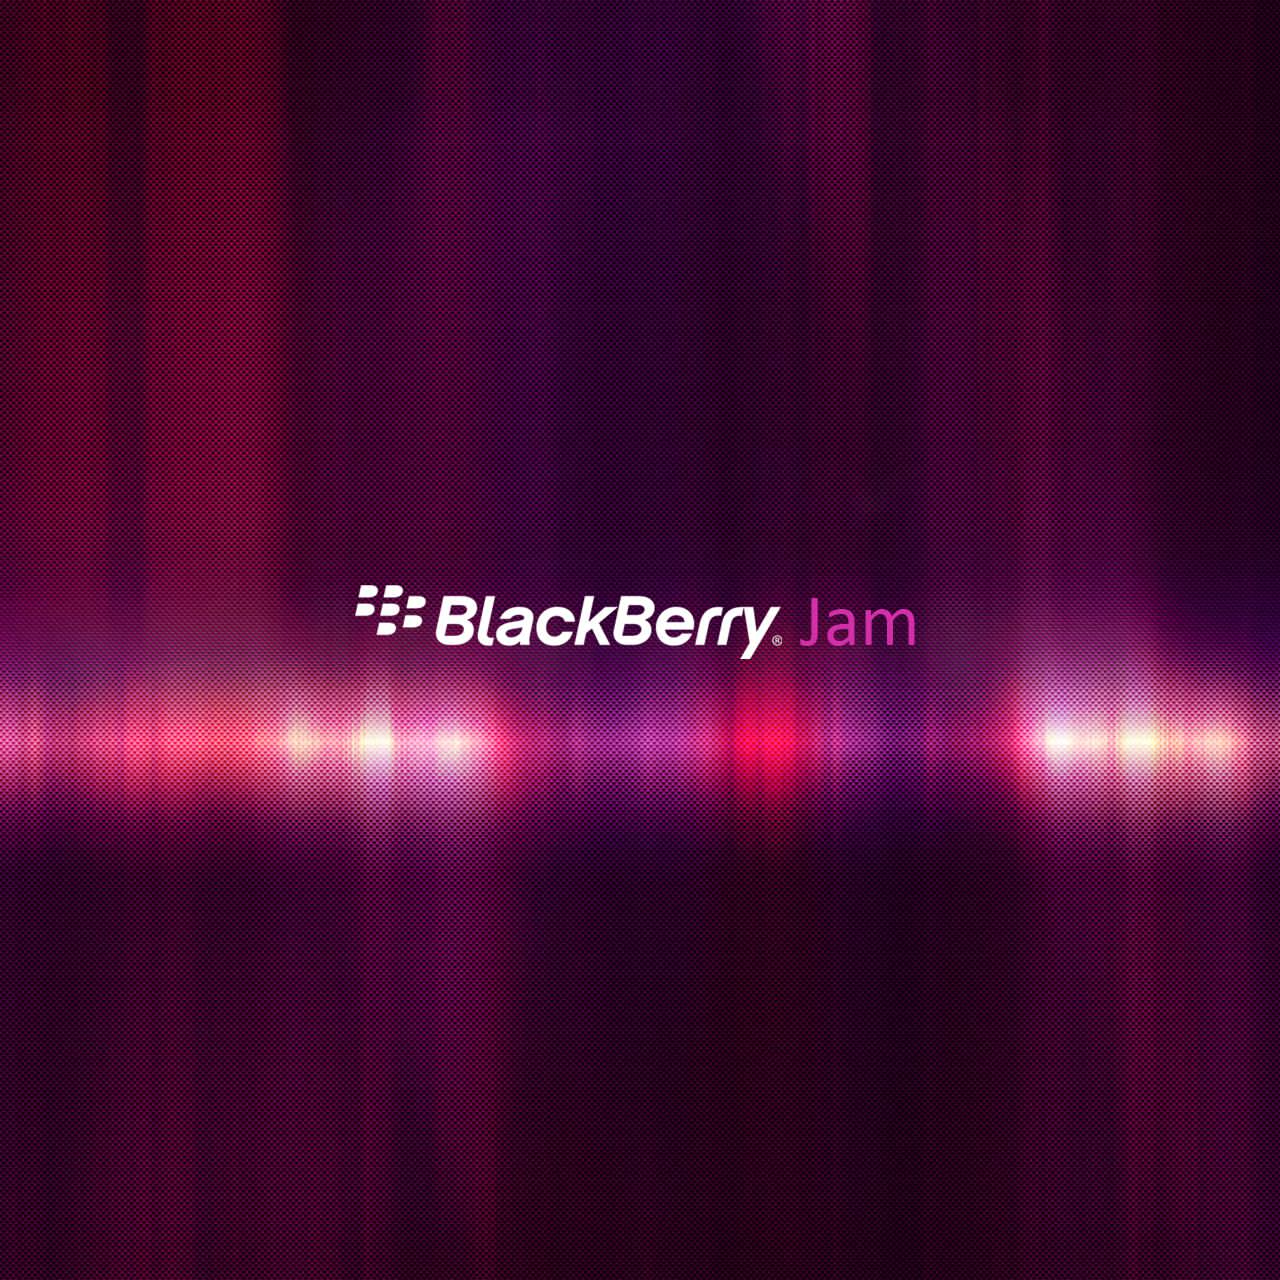 BlackBerry Jam Americas Wallpaper. The World Of Pootermobile